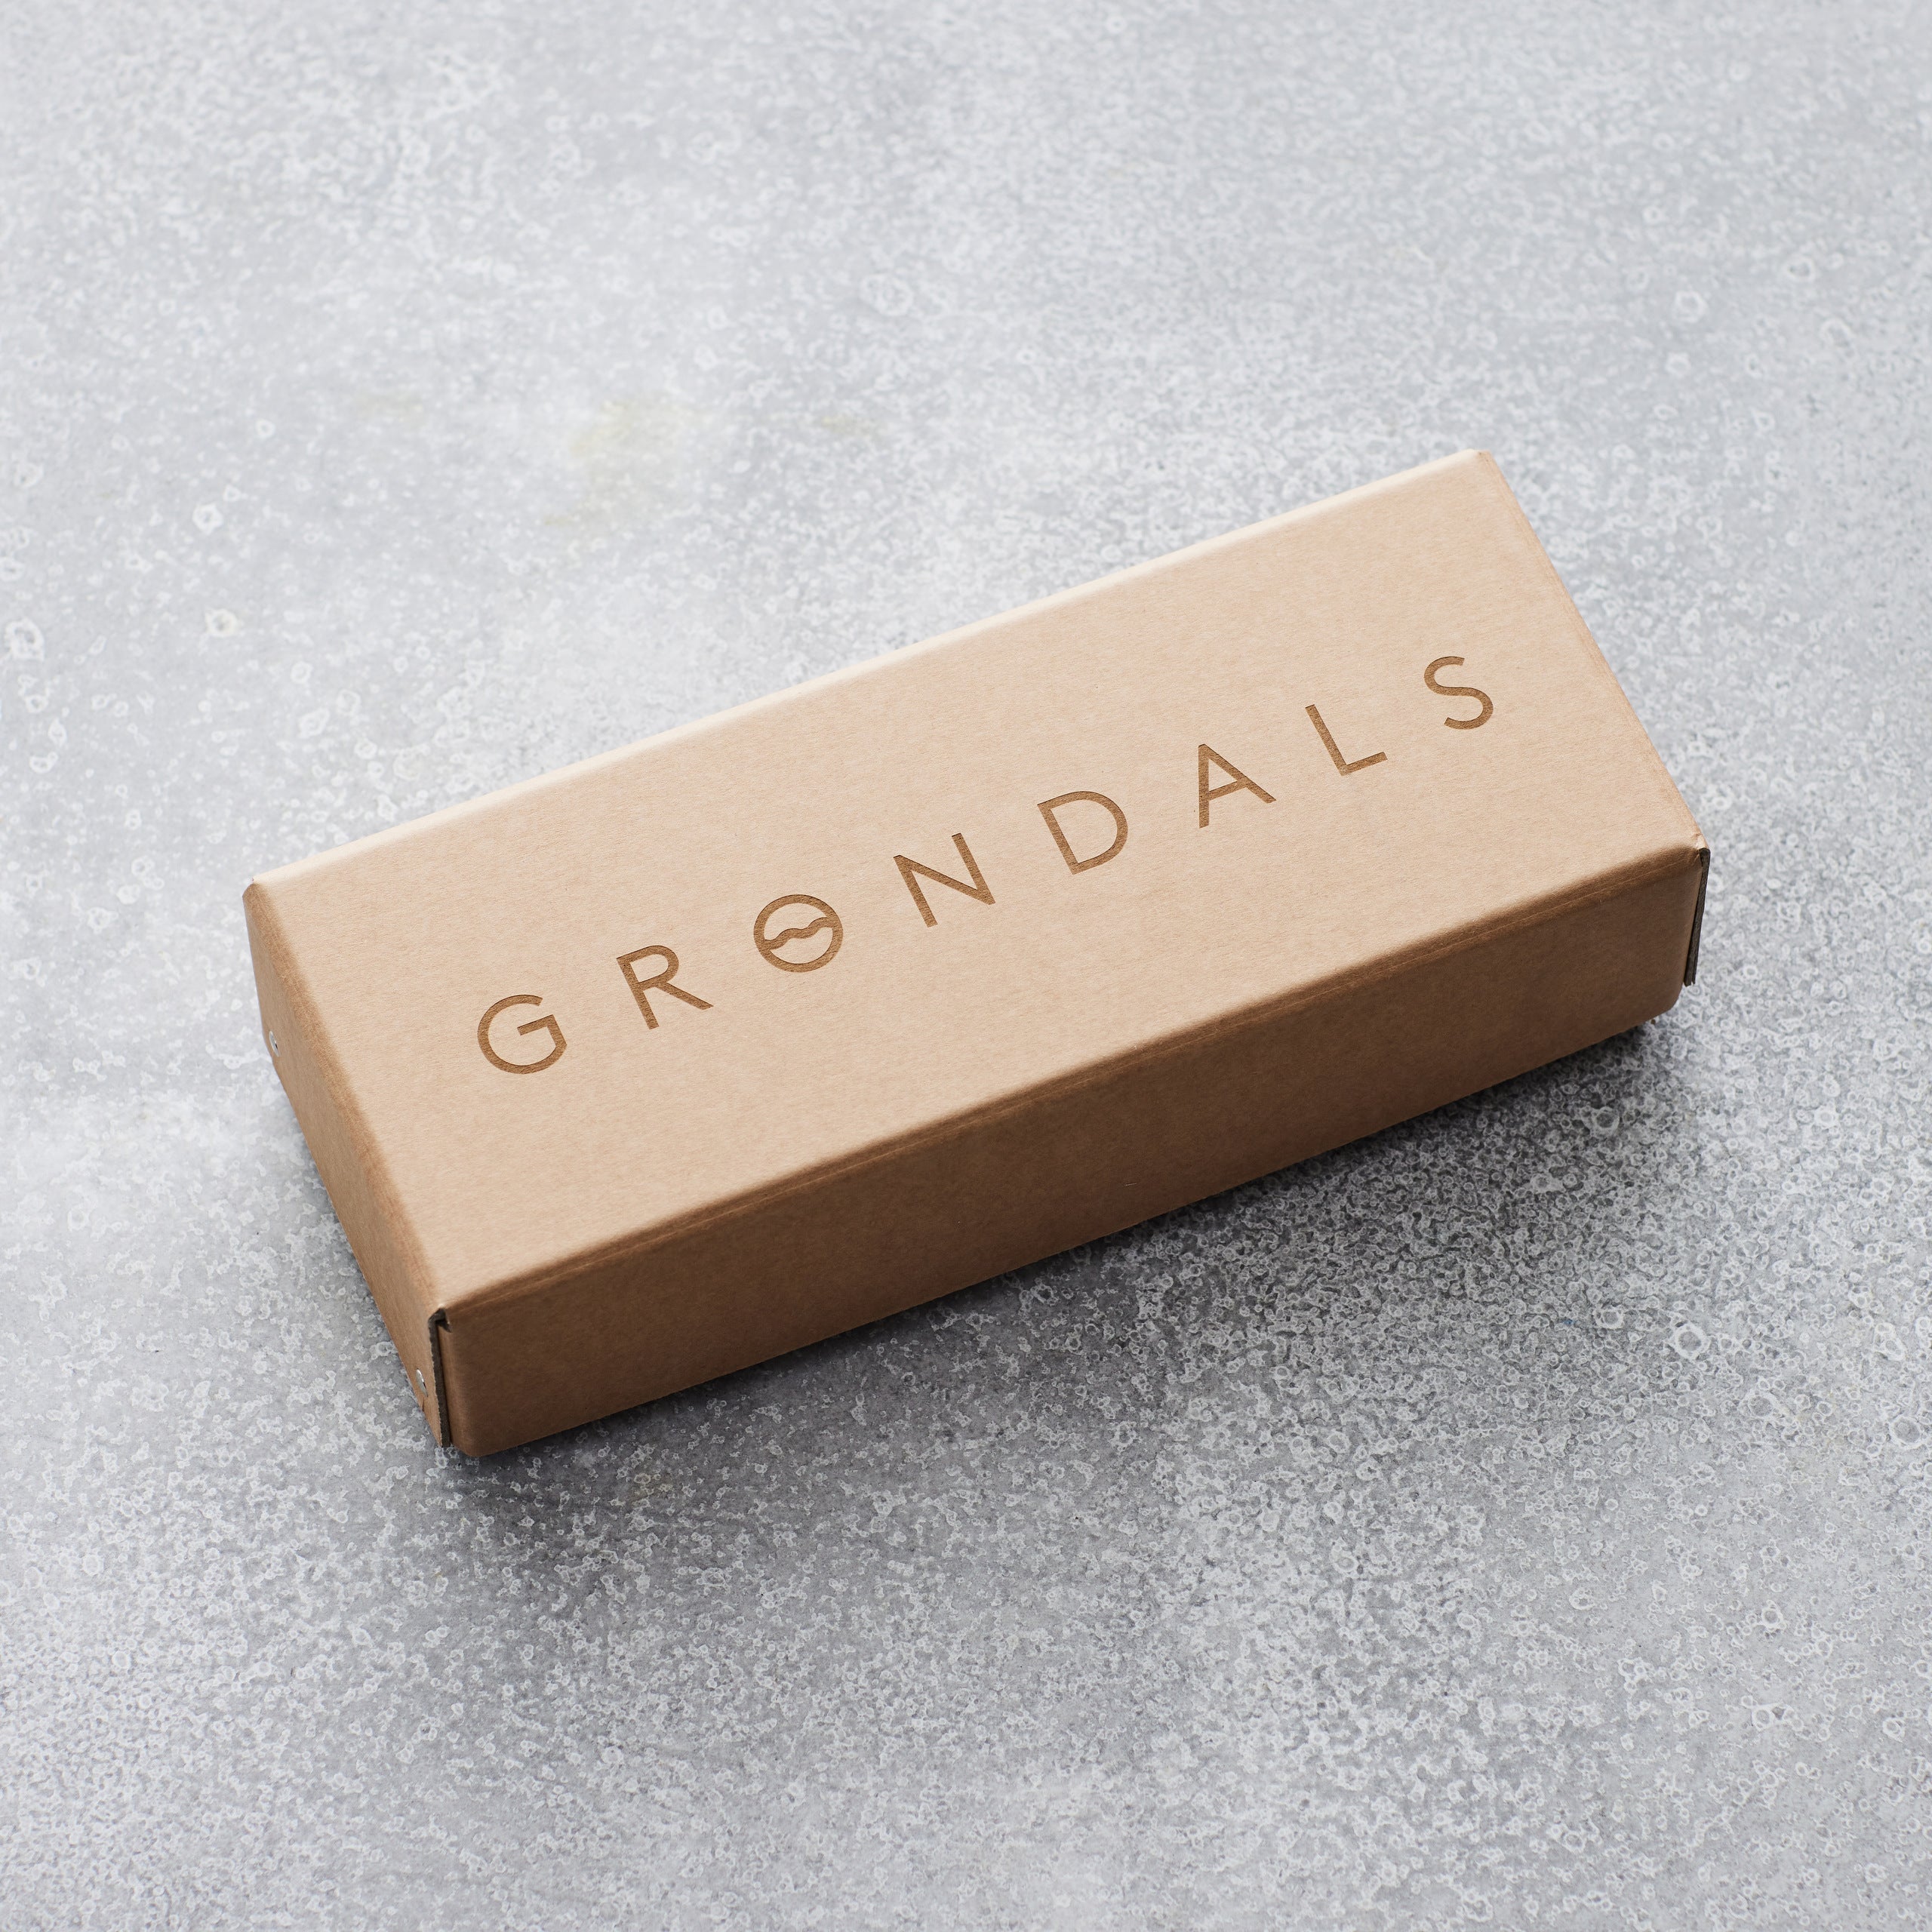 Grøndal's gift box